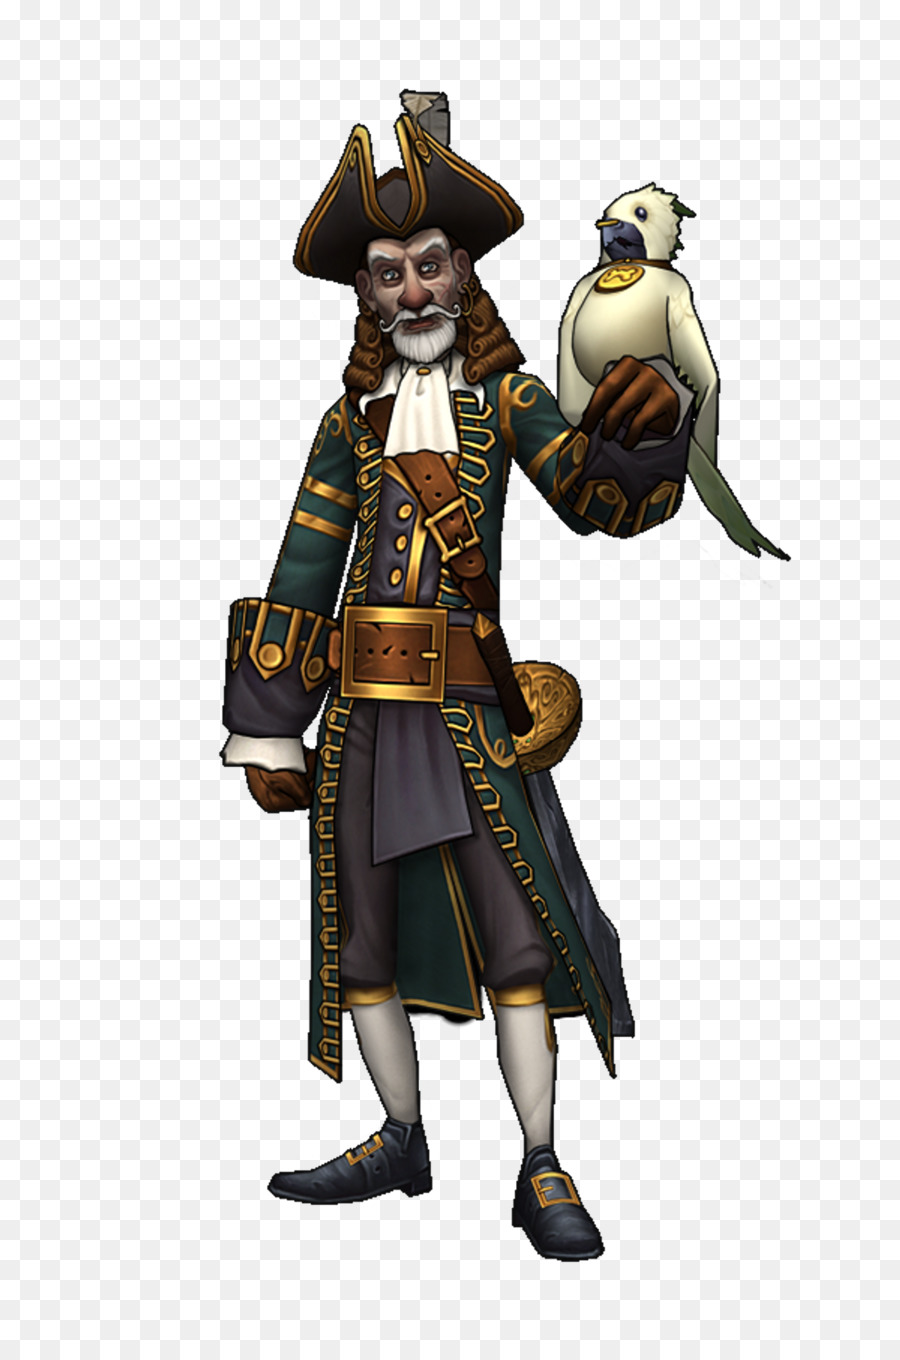 Pirate101 Wizard 101 Pirateria Repubblica dei Pirati Avery Dennison - pirati